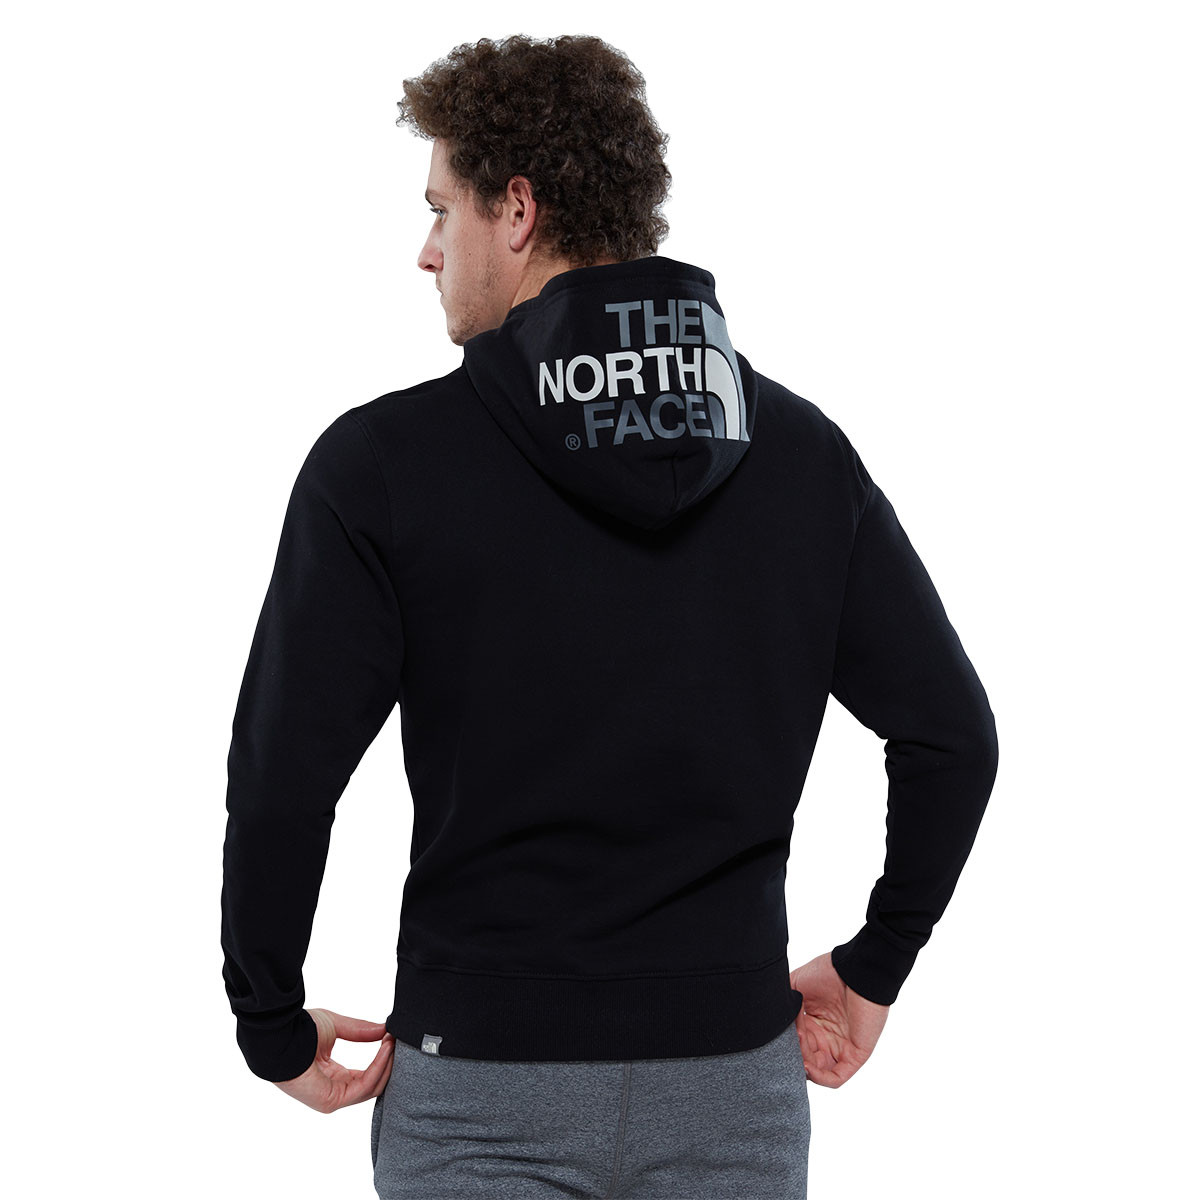 The North Sweatshirt The Seasonal Negozio Face | Face Peak North Black Drew